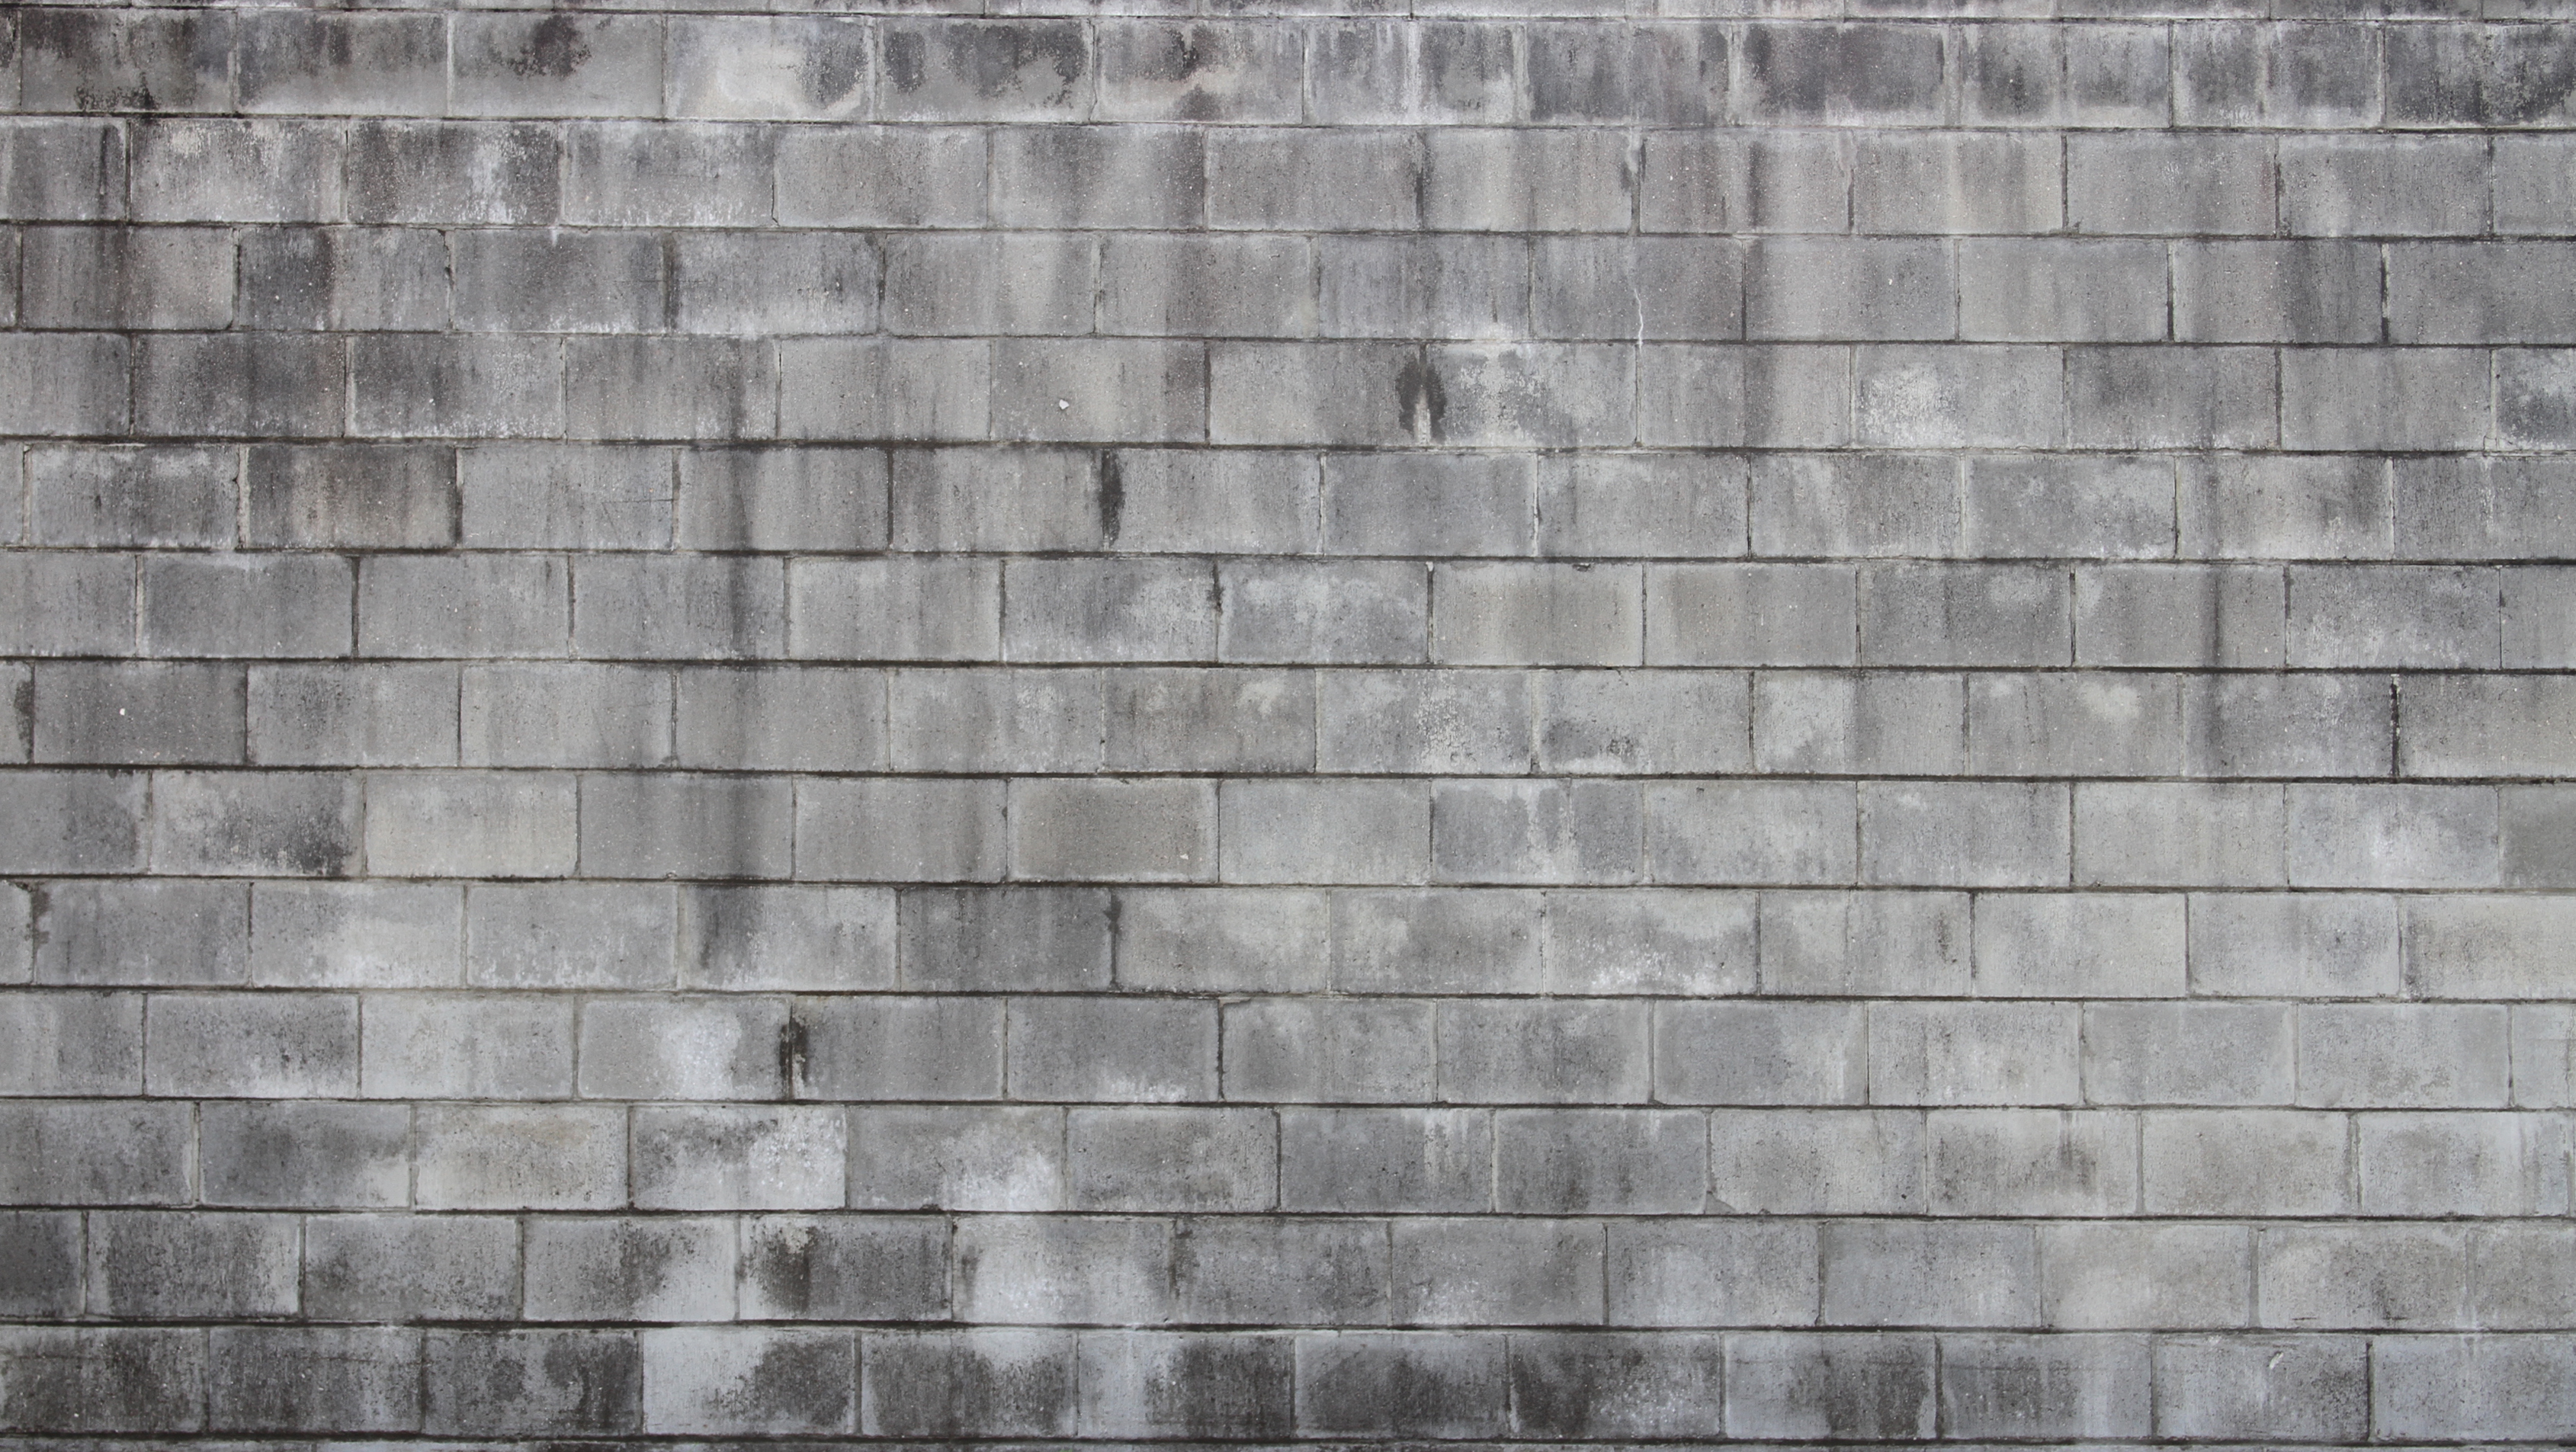 Aged Cinder Block Wall Texture - 14Textures